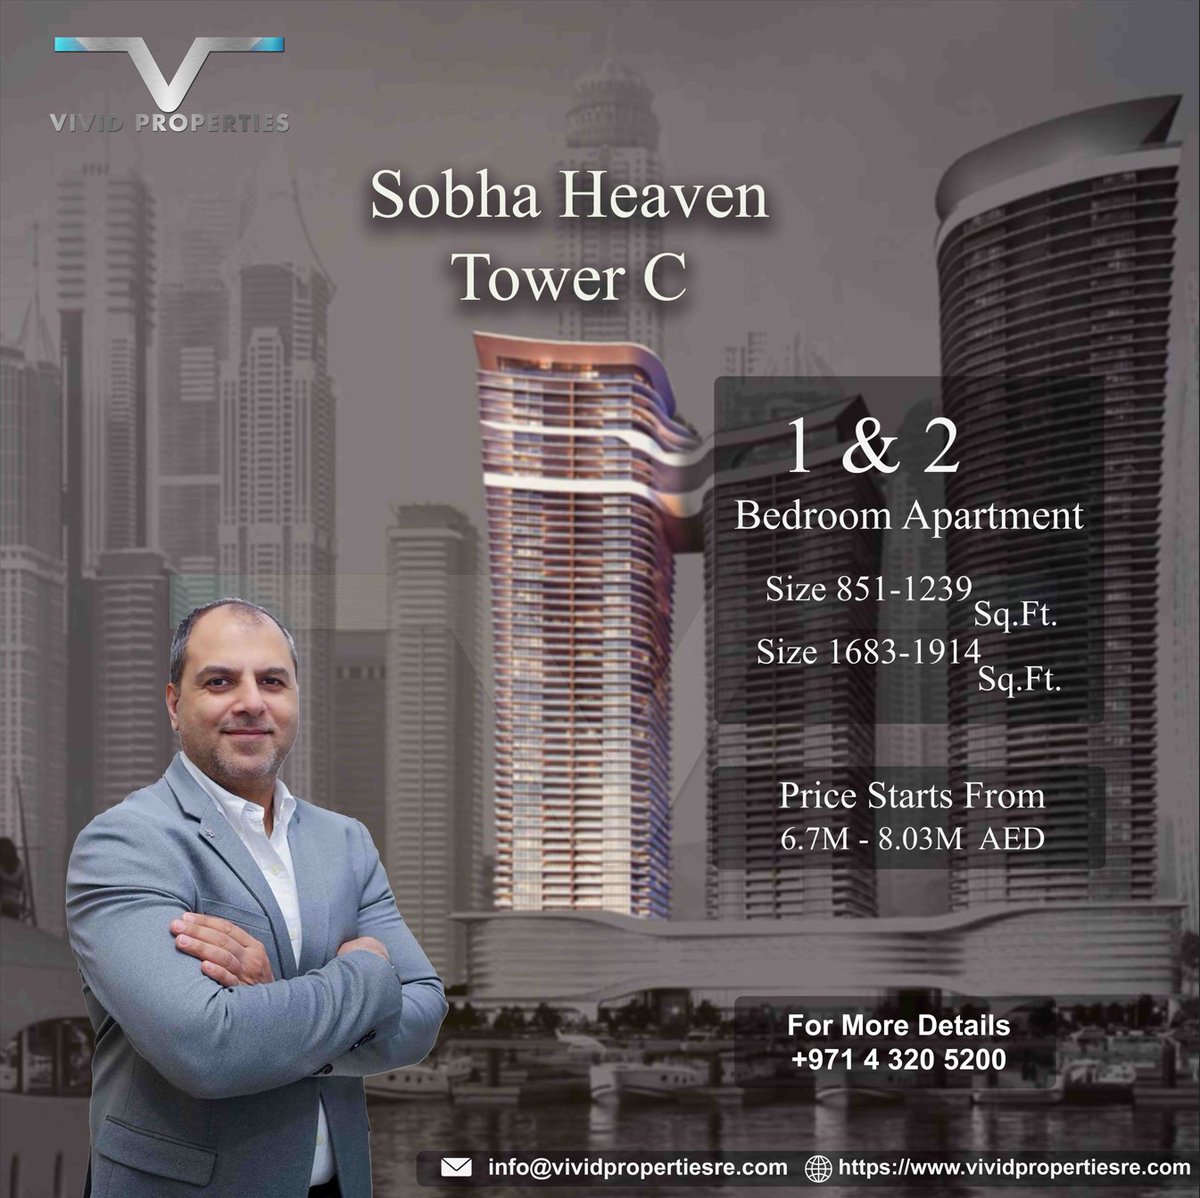 SOBHA SEAHEAVEN TOWER-C

#sobha #Sobhaseahaven #Vivid #vividproperties #properties #Luxury #sobhadubai #Dubai #uae #dubailife #dubailifestyle #sobharealty #apartment #bedroom #luxuryapartments #2bedroomapartment